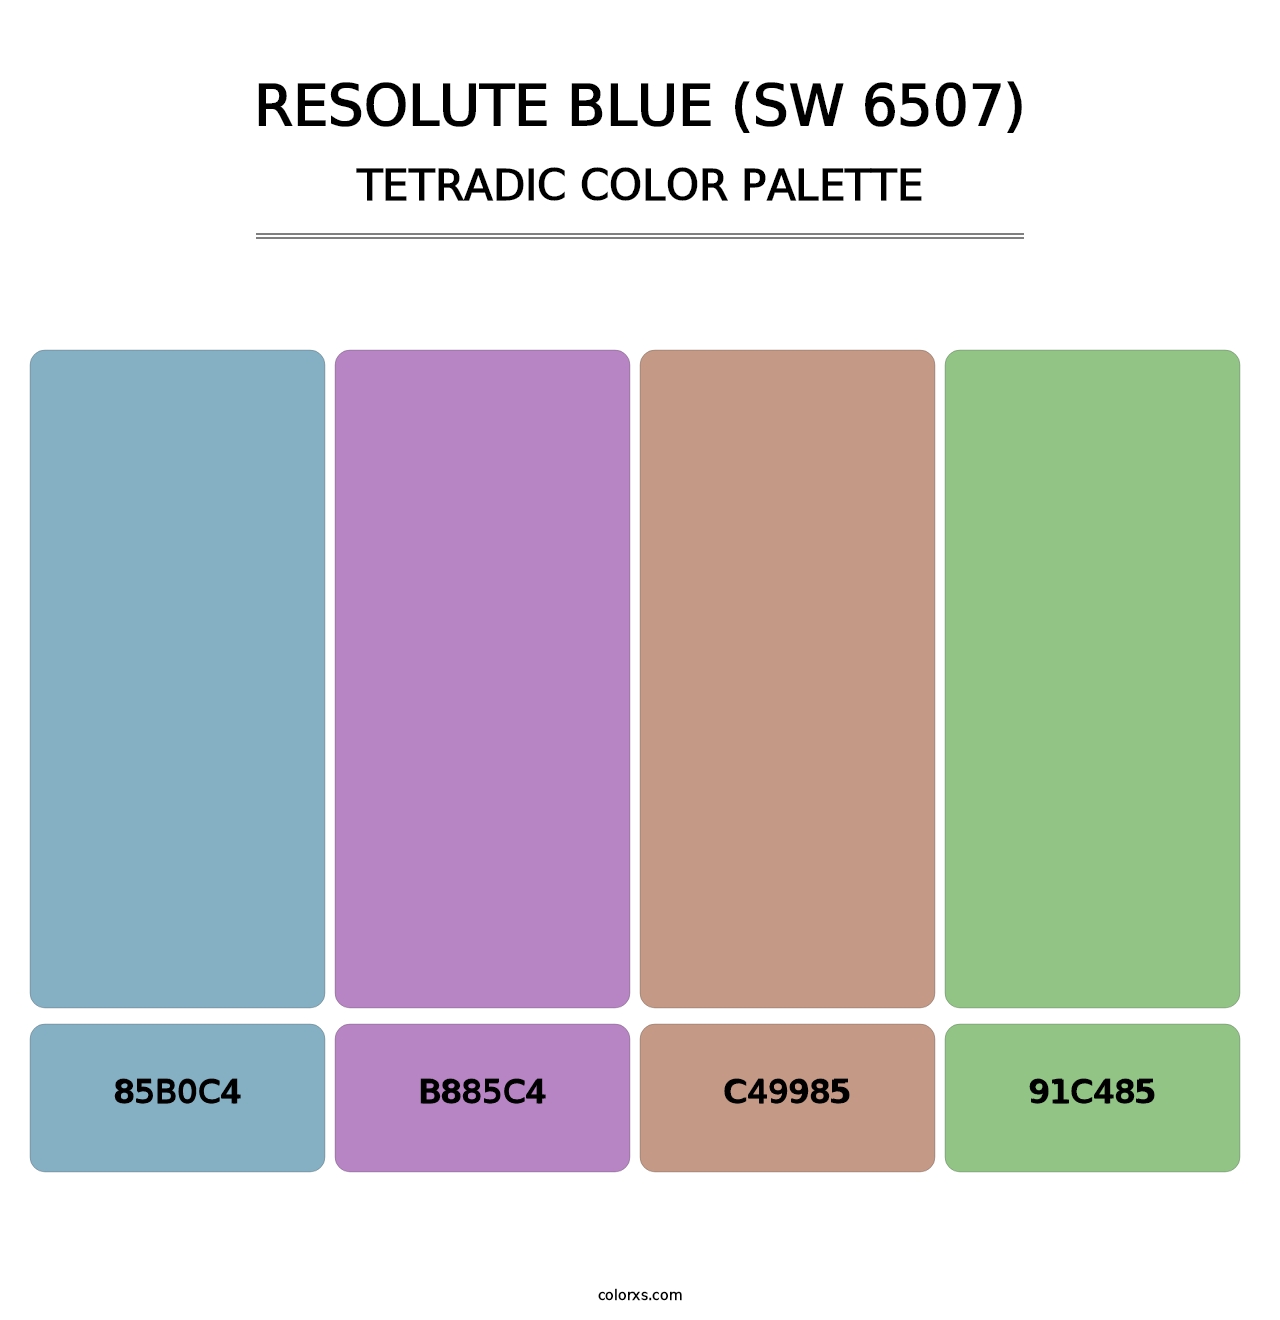 Resolute Blue (SW 6507) - Tetradic Color Palette